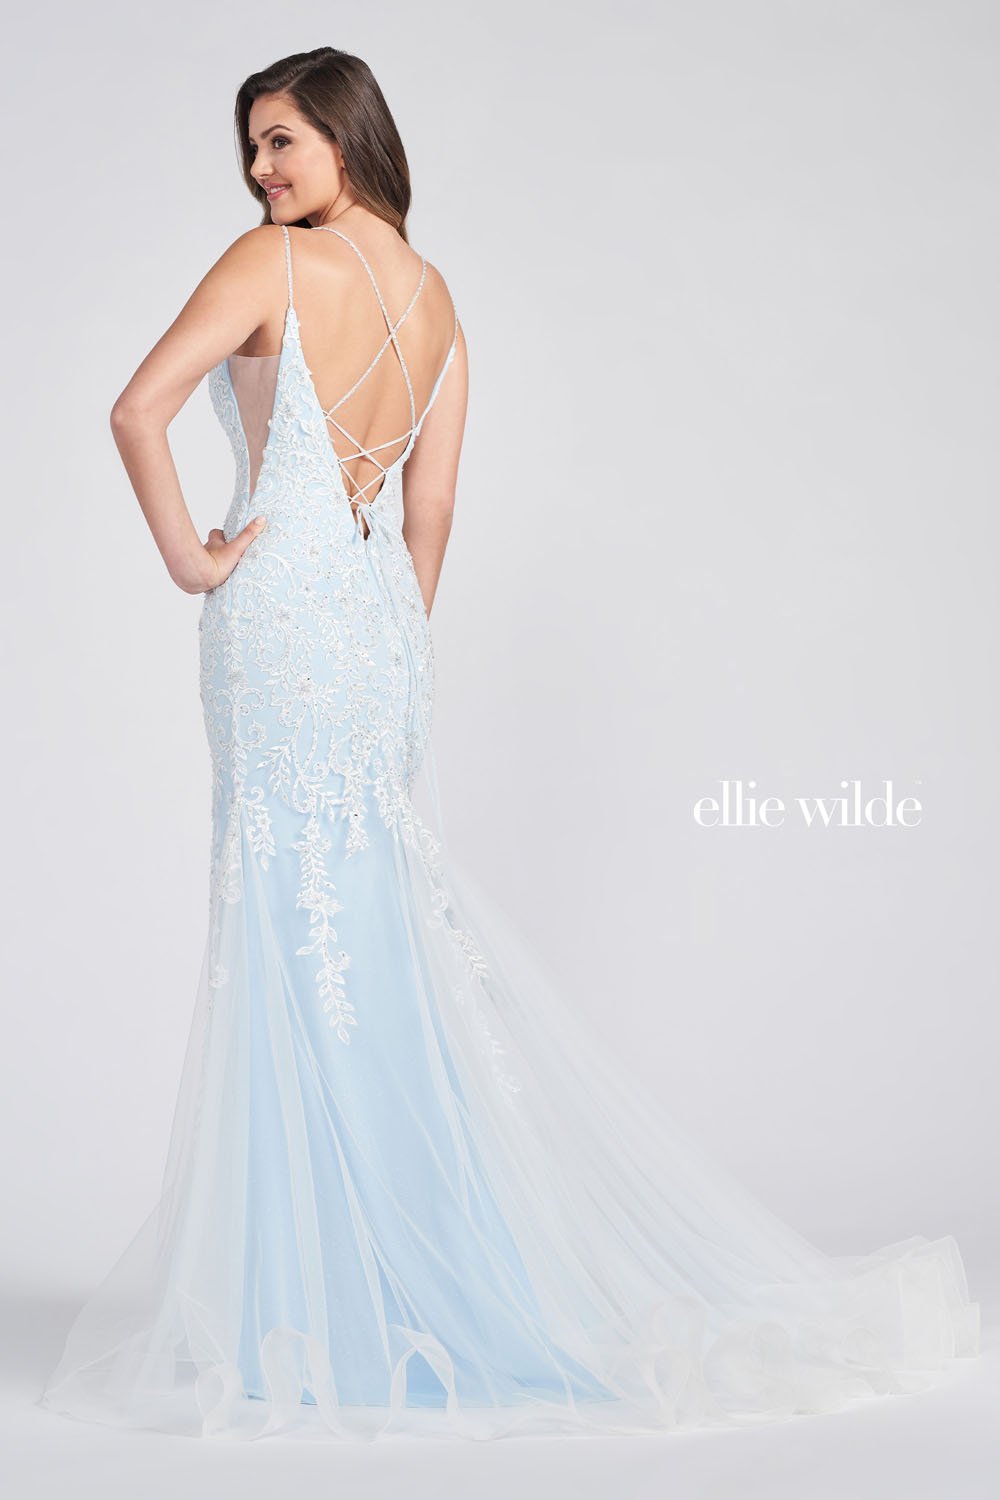 Ellie Wilde Ivory Light Blue EW122058 Prom Dress Image.  Ivory Light Blue formal dress.